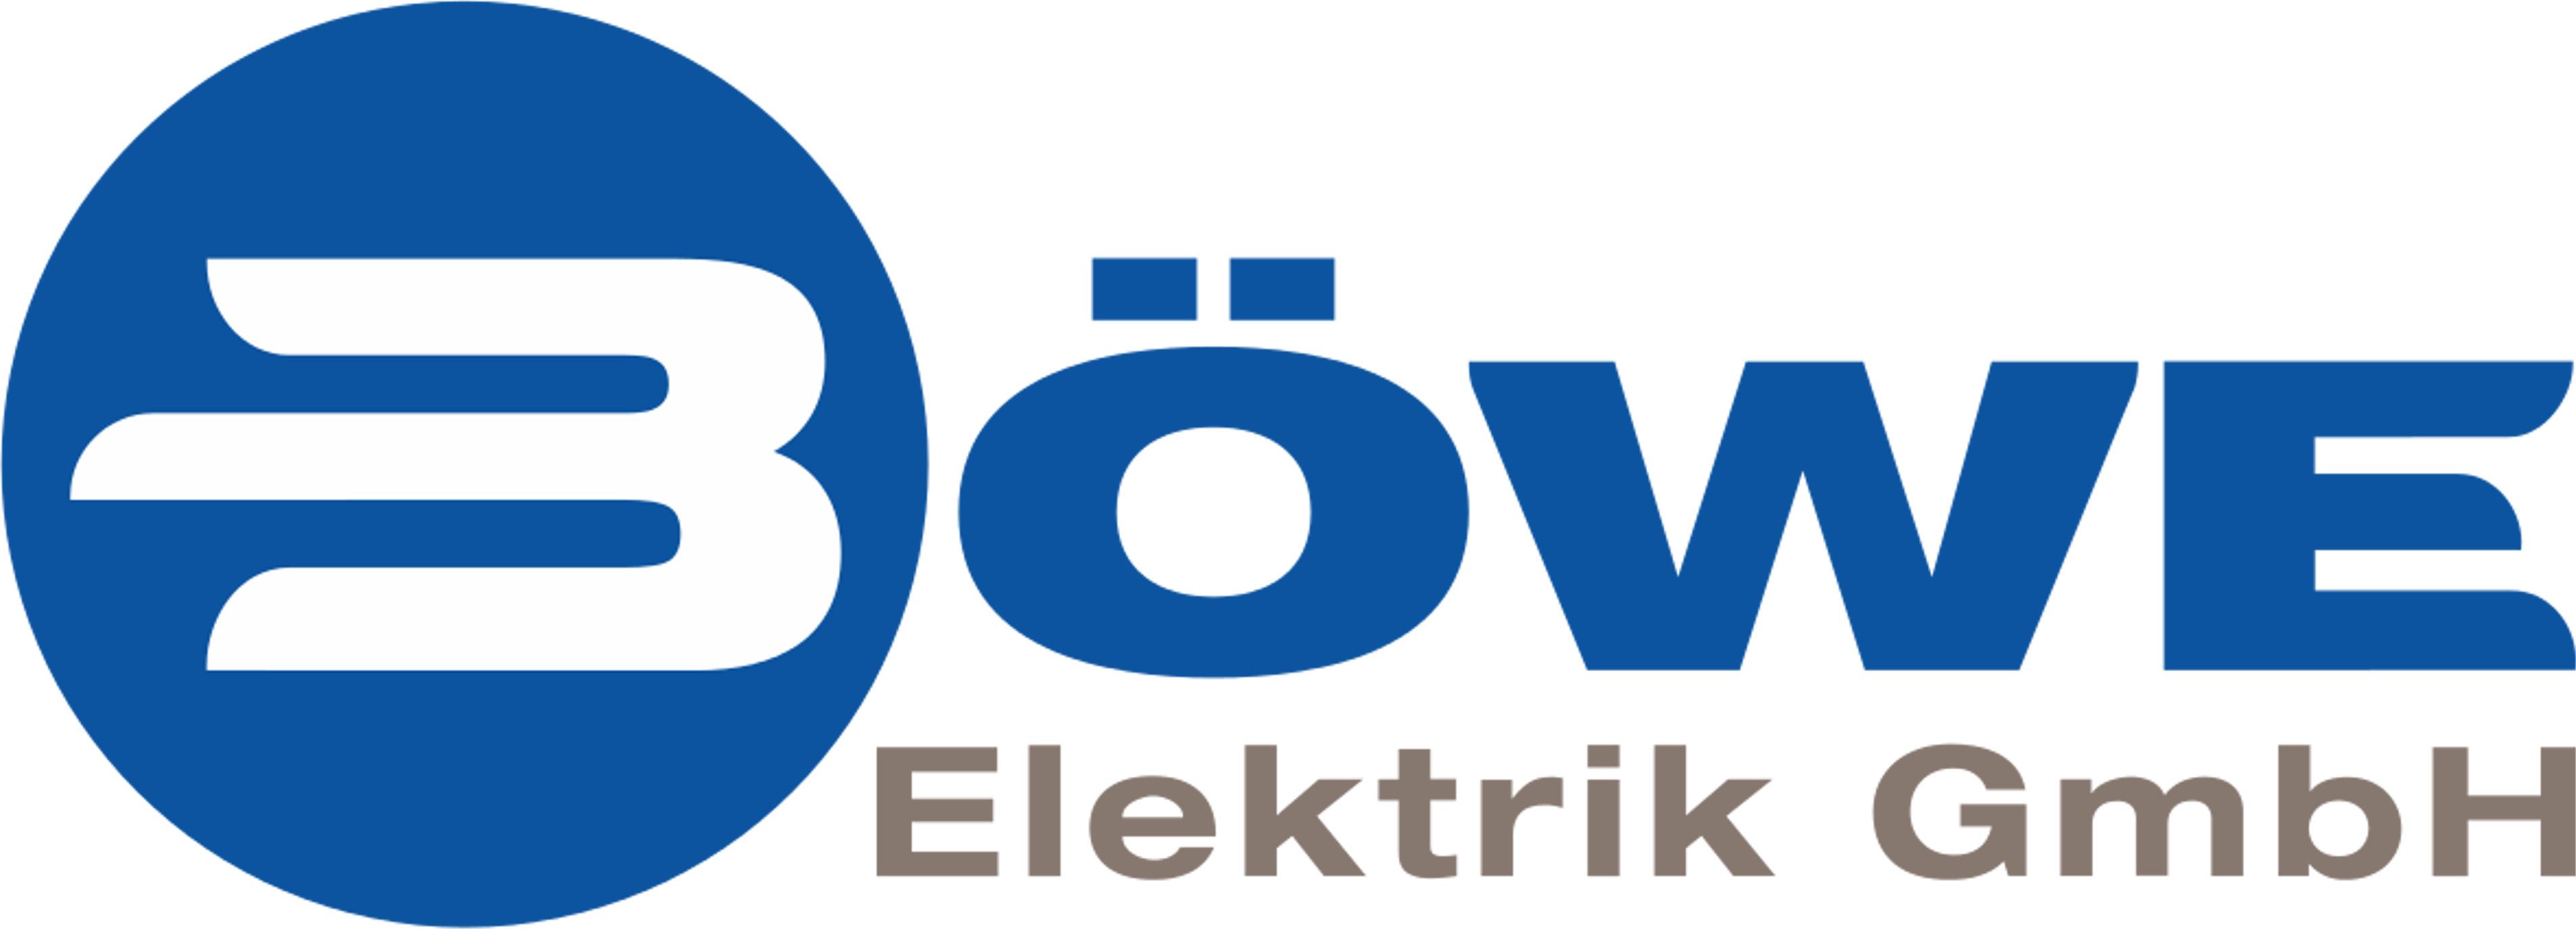 BÖWE-Elektrik GmbH, Kraftsdorf